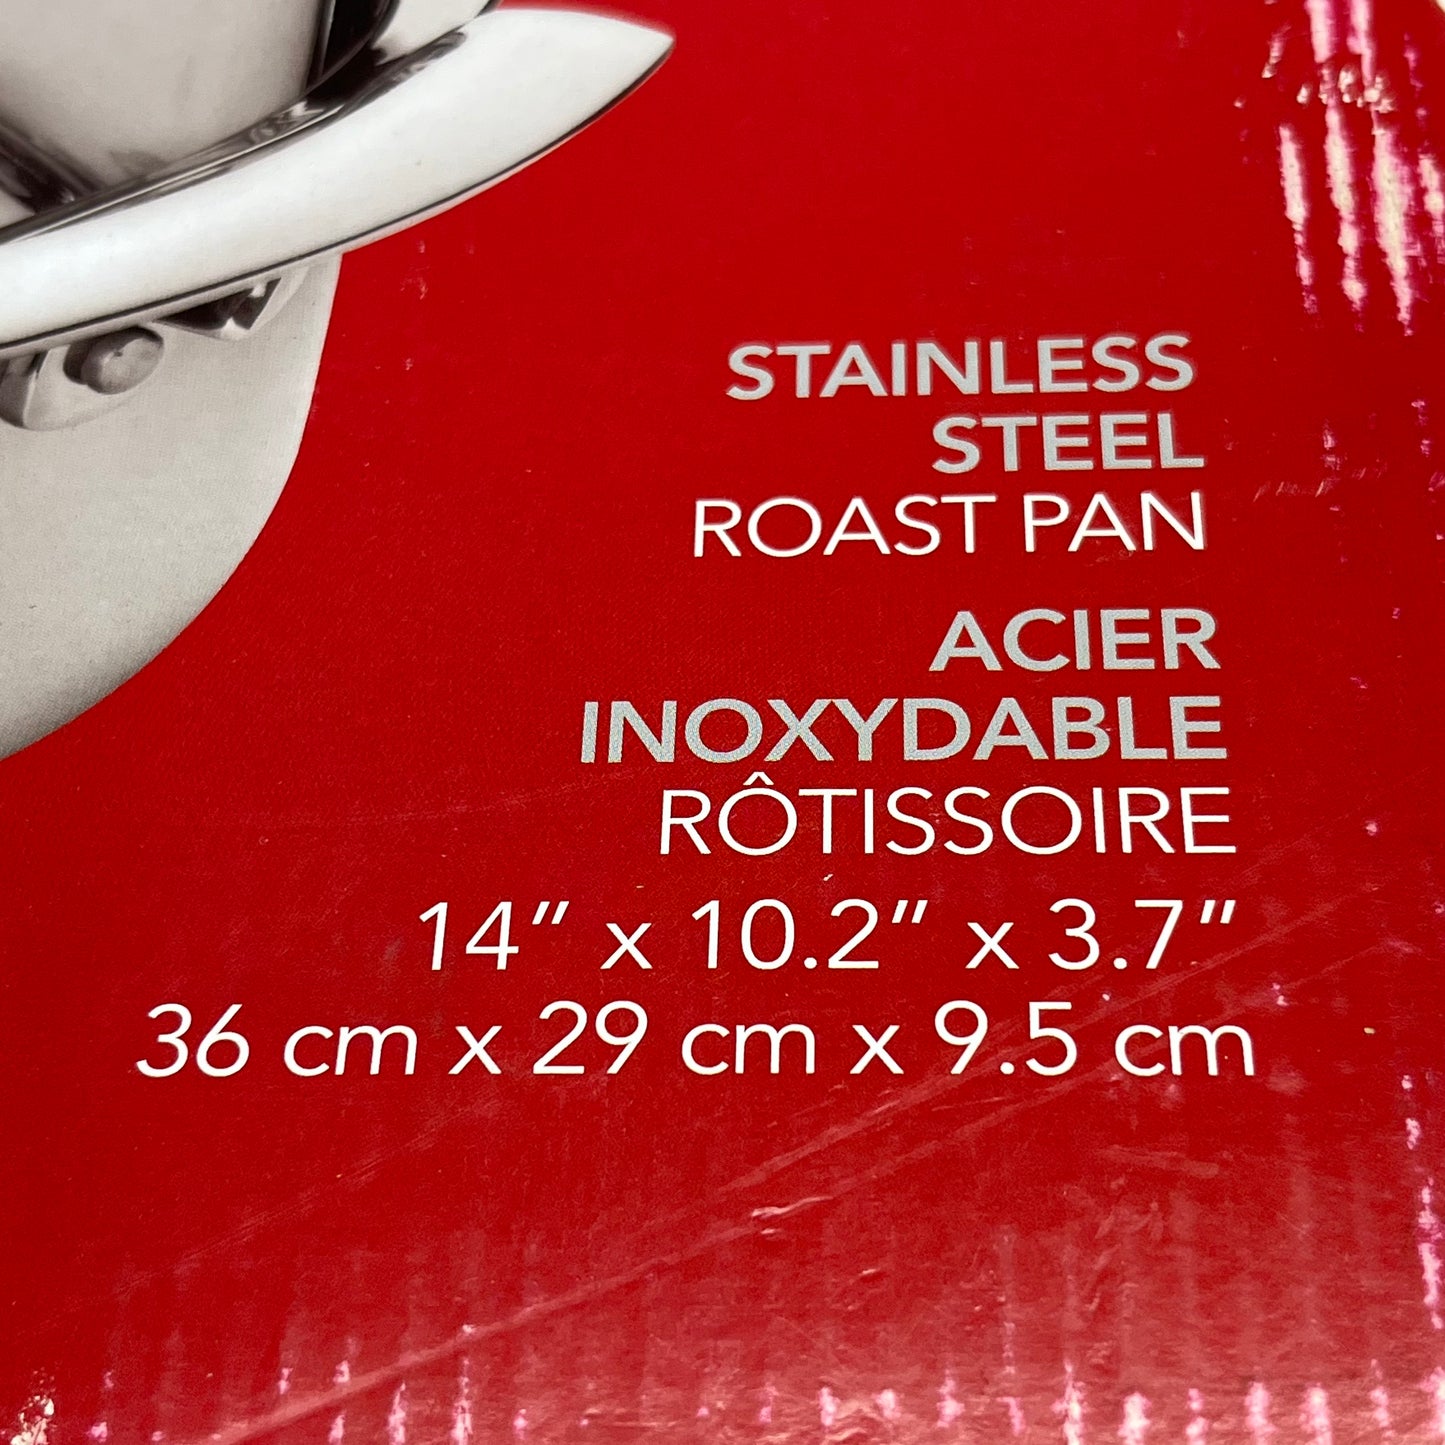 BROWNE Thermalloy Roast Pan 14" x 10.2" x 3.7" 5724179 (New)